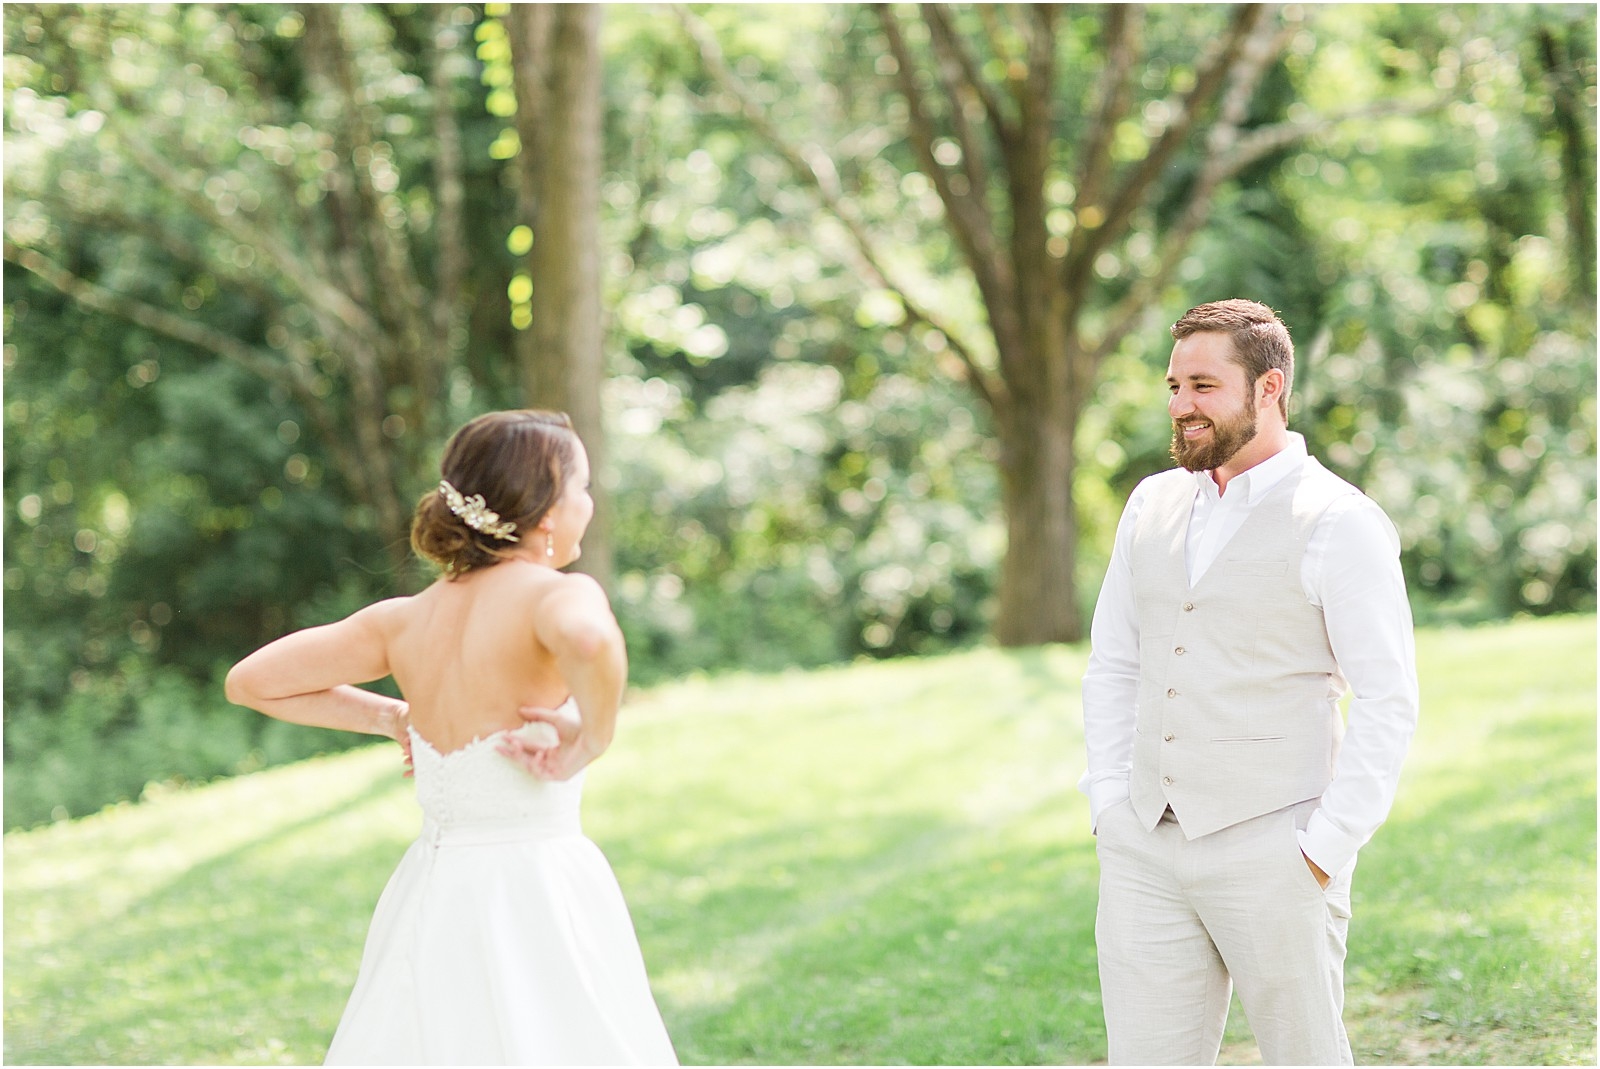 A Evansville Indiana Backyard Wedding | Bailey and Ben 022.jpg